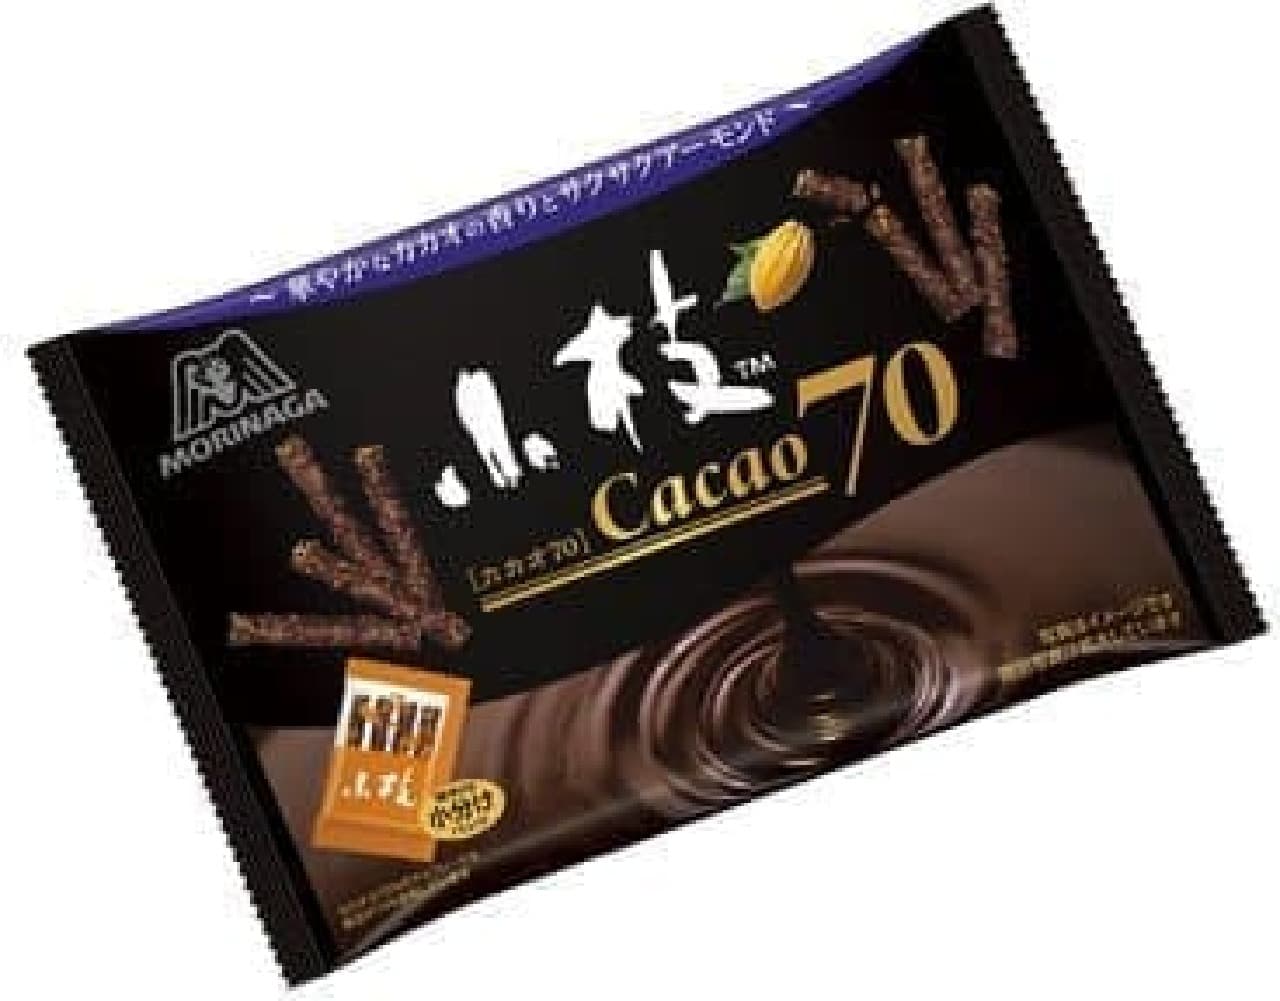 Morinaga & Co. "Twig [Cacao 70]" Tea Time Pack